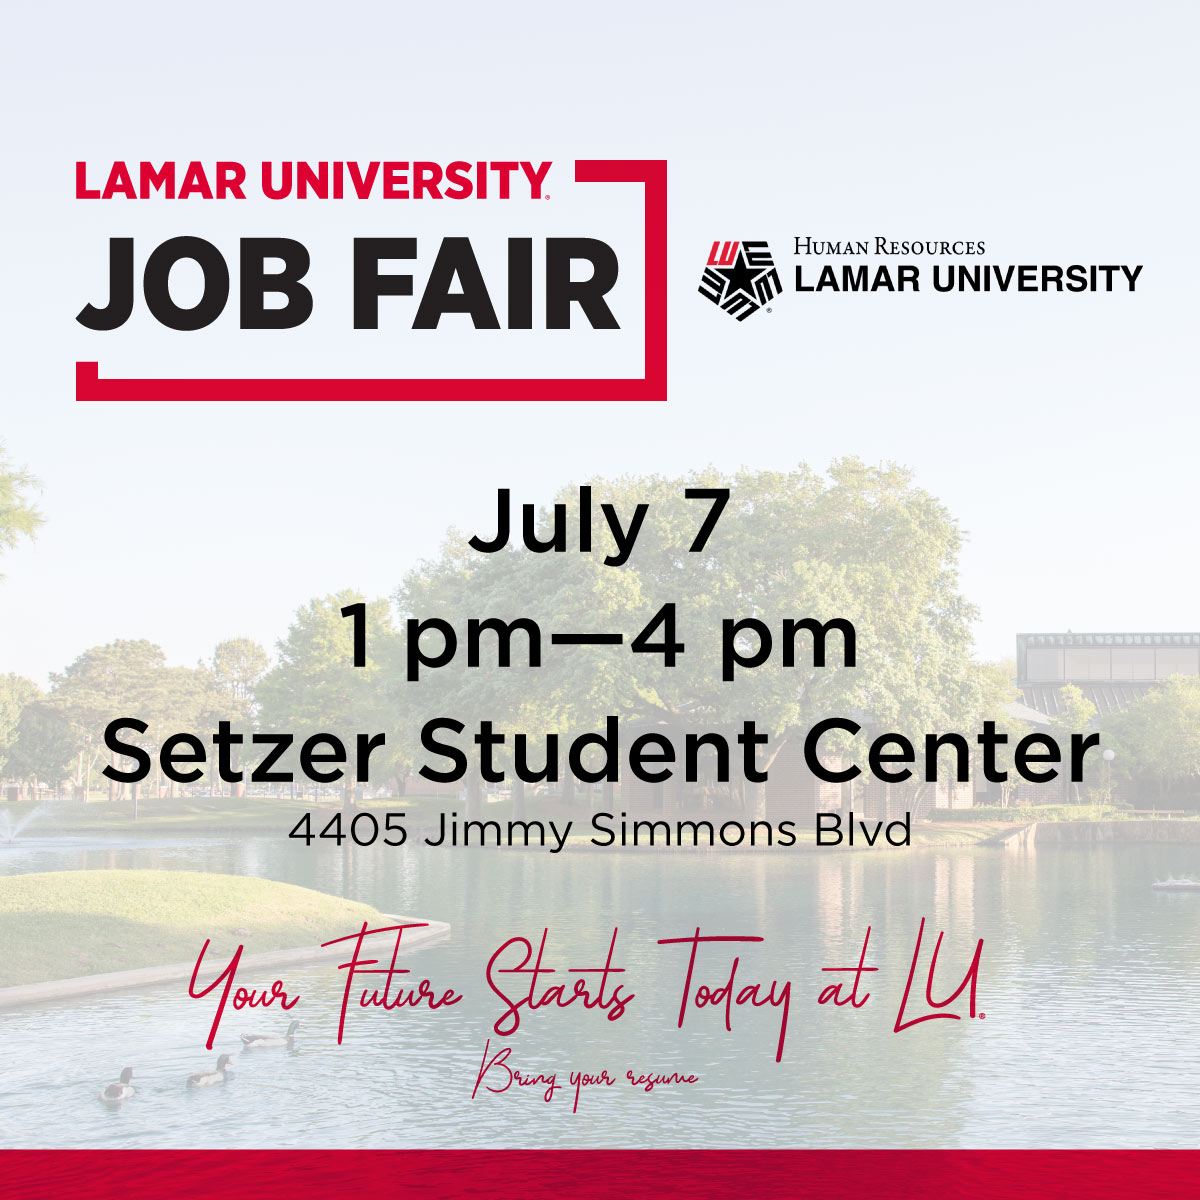 Lamar University to Host Job Fair on July 7